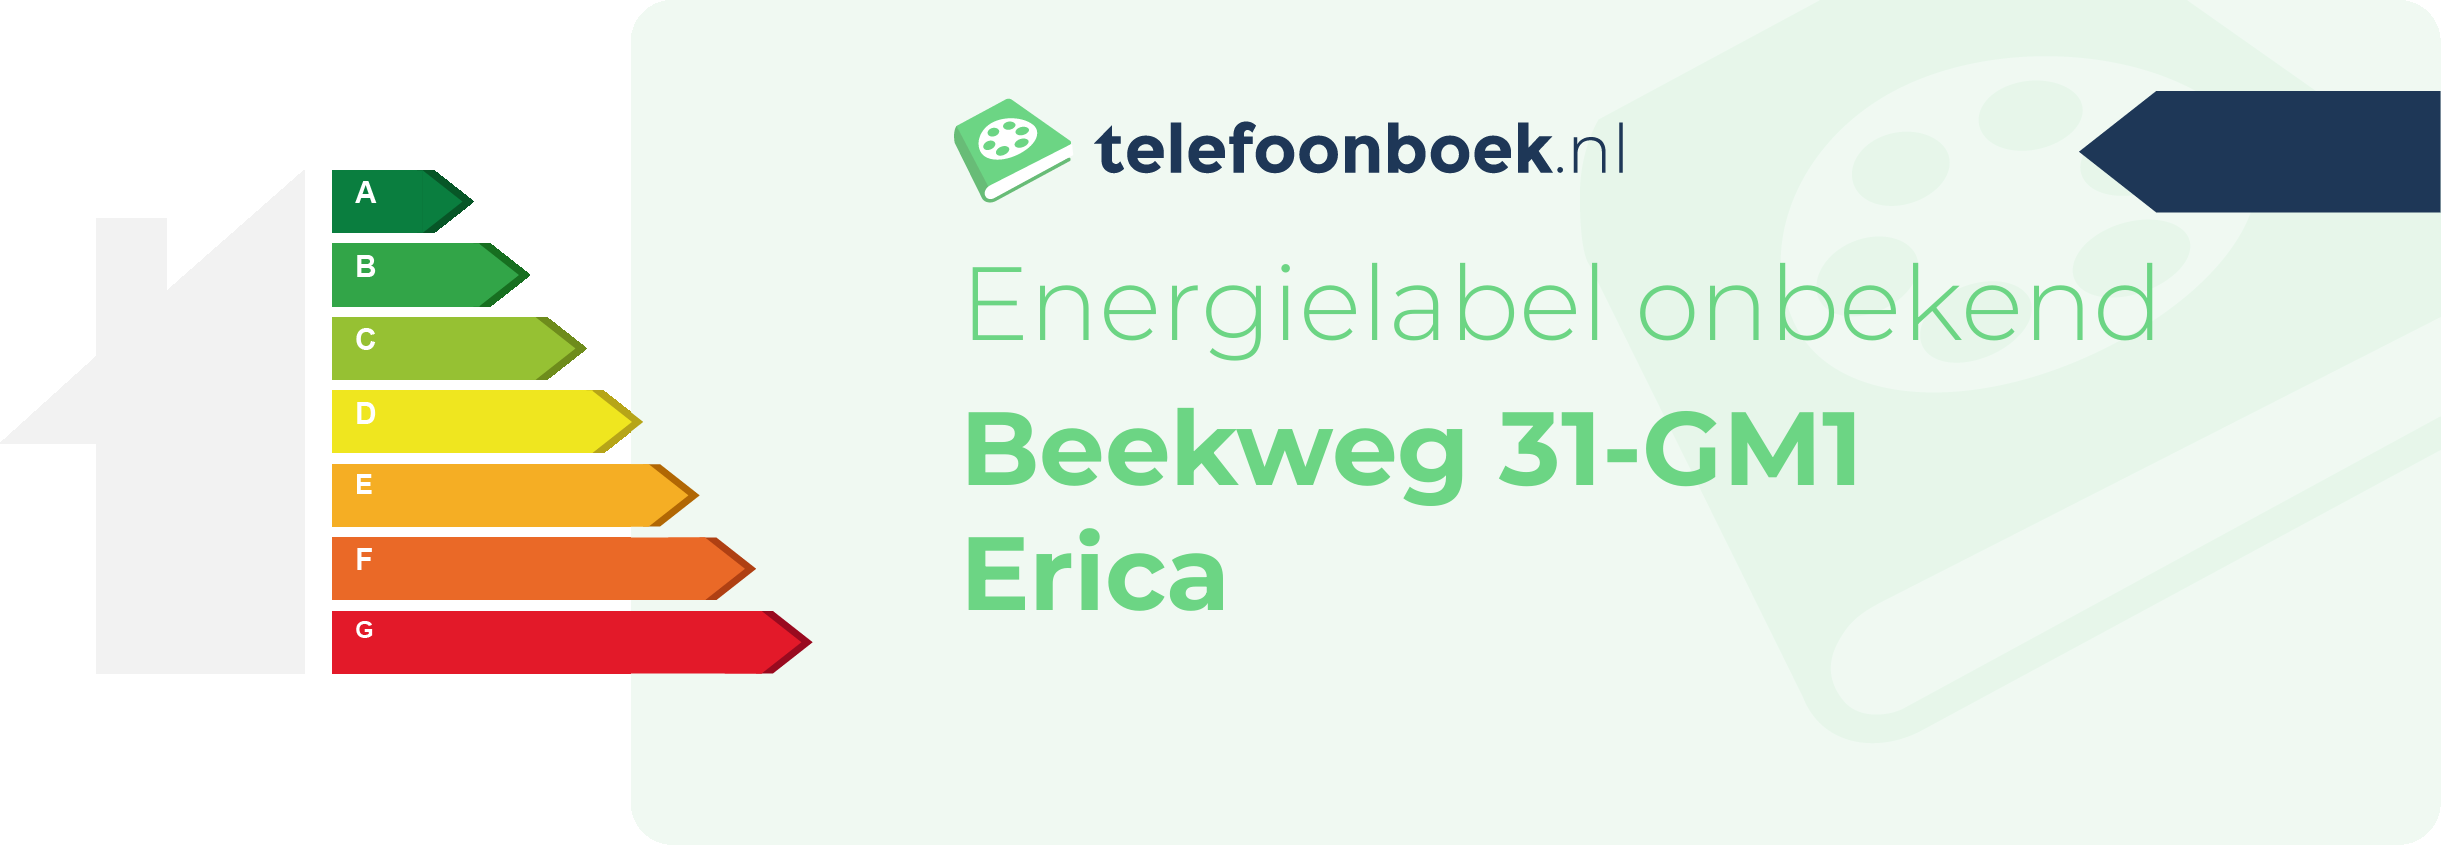 Energielabel Beekweg 31-GM1 Erica